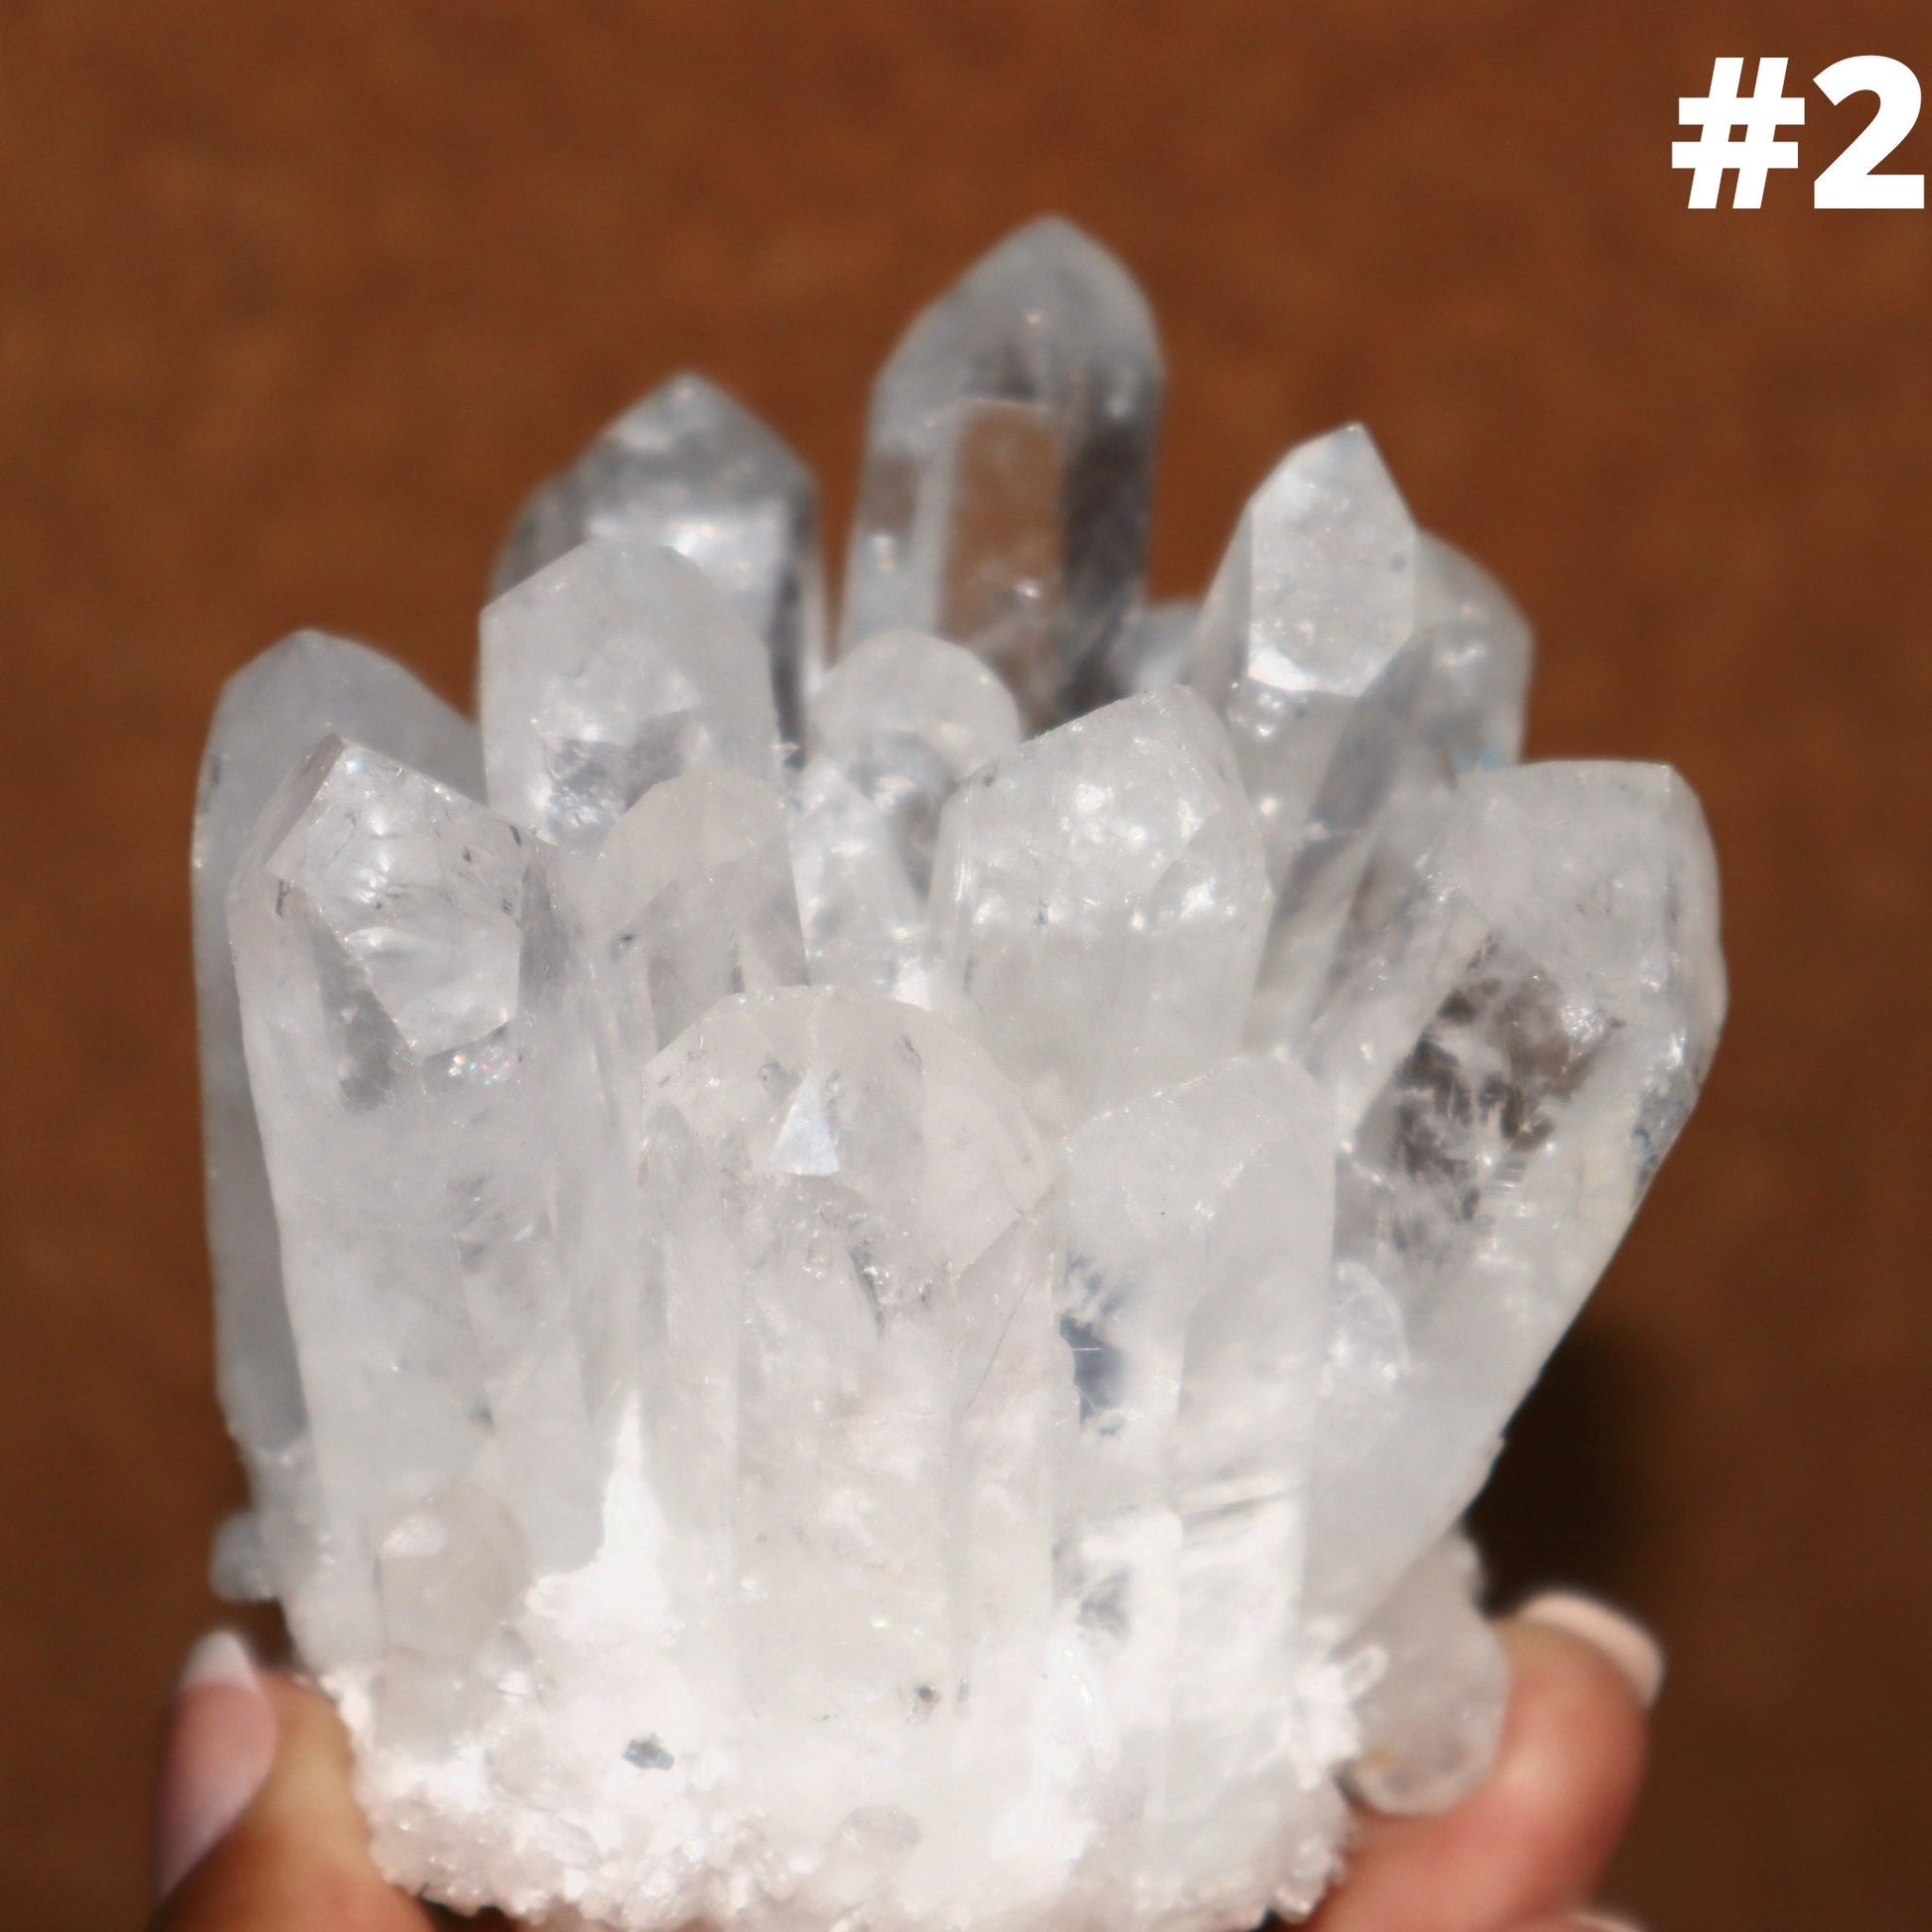 Clear Quartz Cluster Points, Large Raw Clear Quartz Crystal Cluster, Quartz Crystal Cluster Specimen, Natural Quartz, High Quality